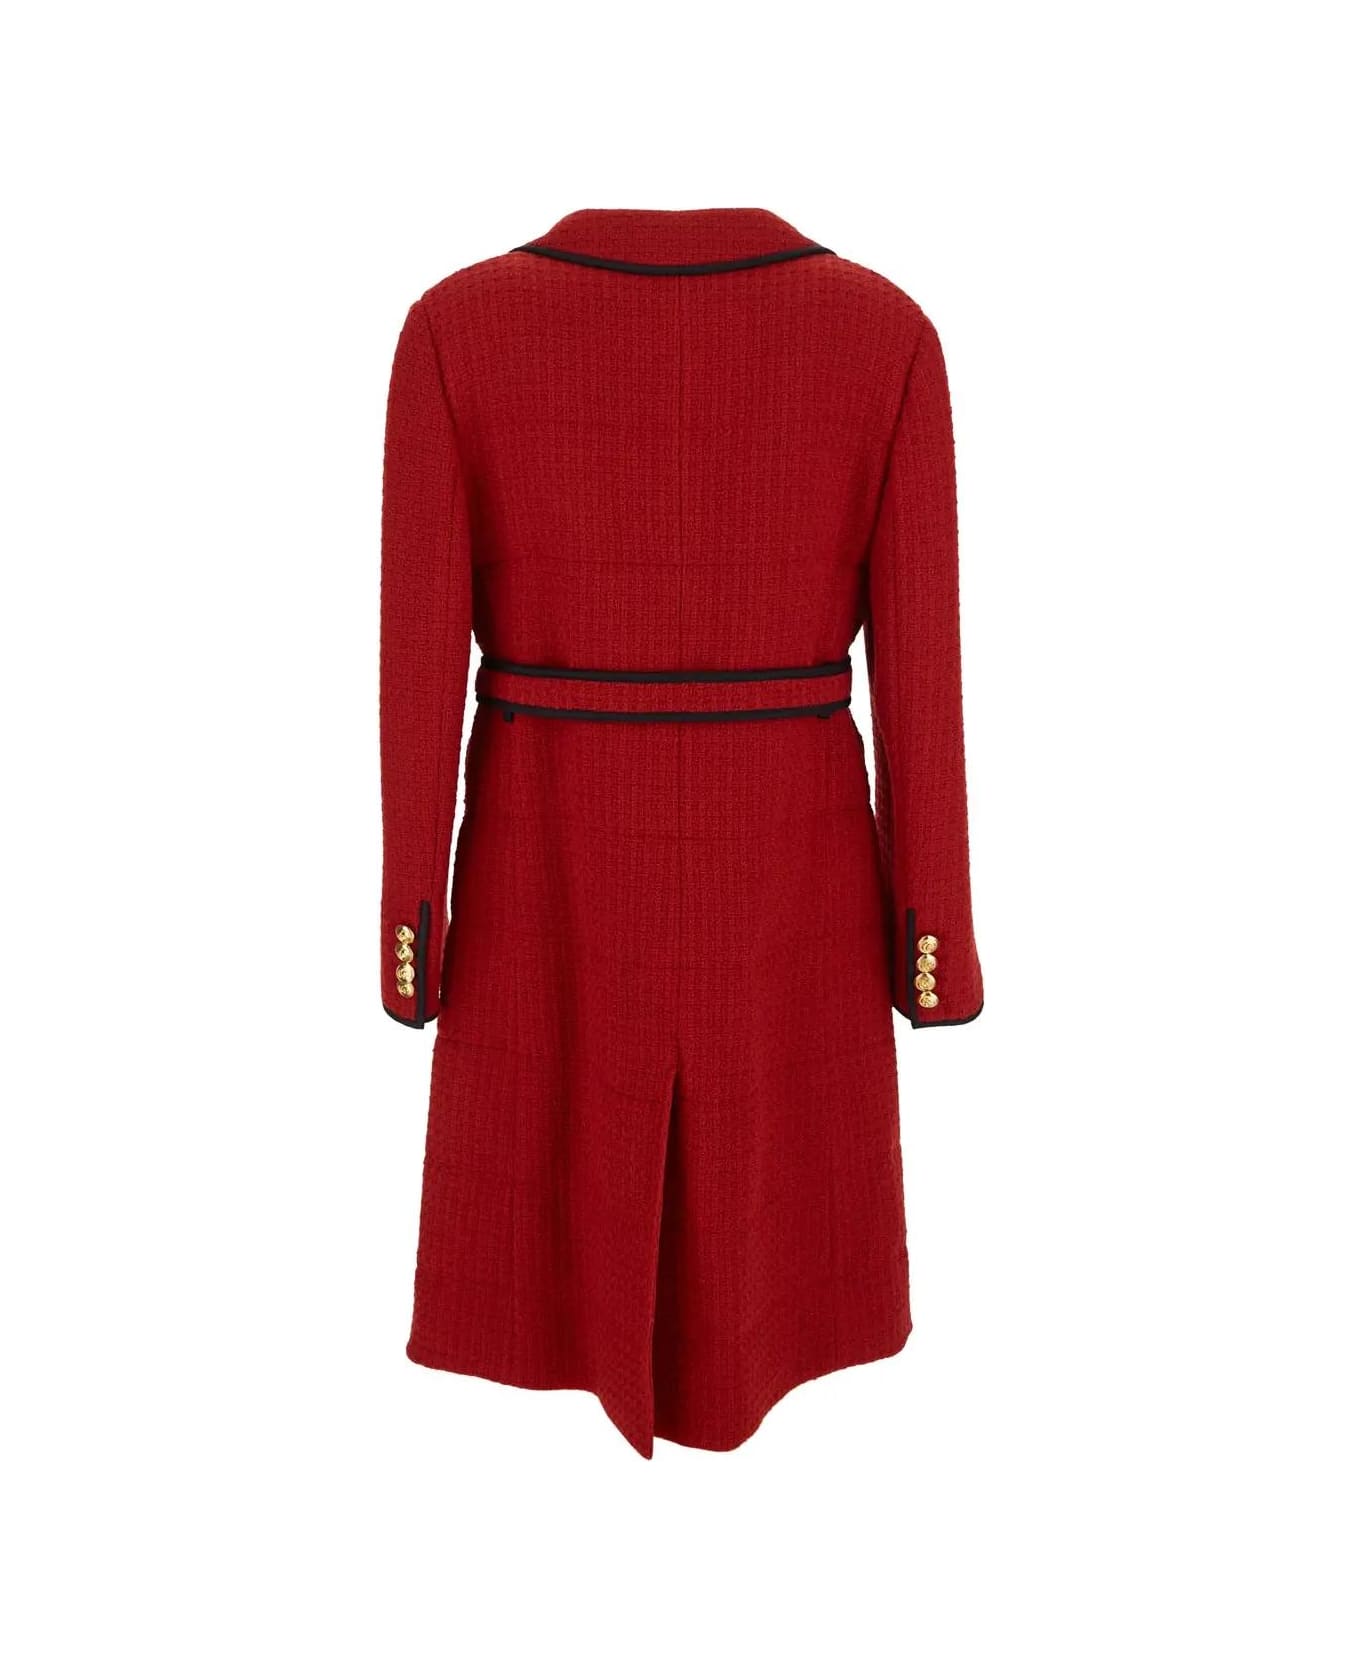 Gucci Wool Long Coat - Red